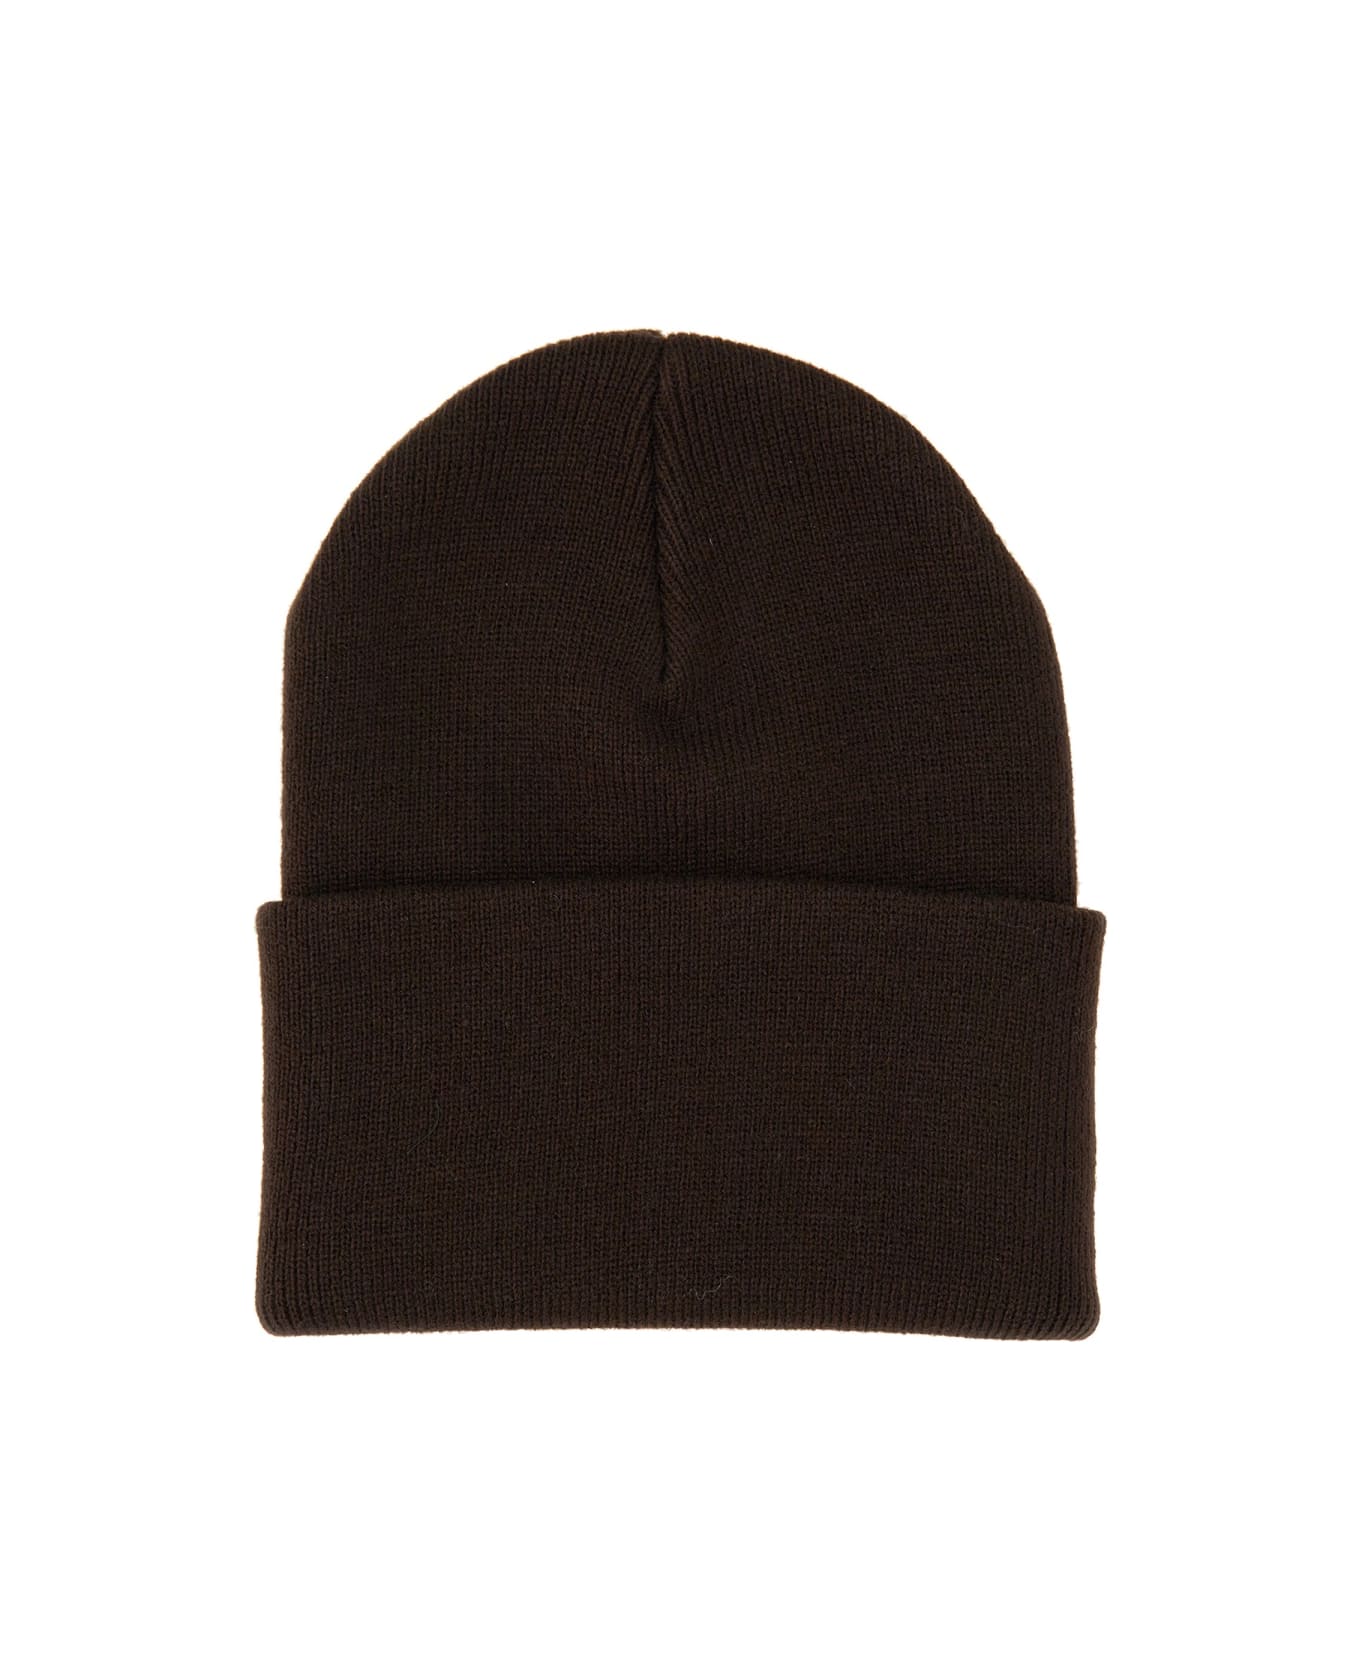 Carhartt Knit Hat - BROWN